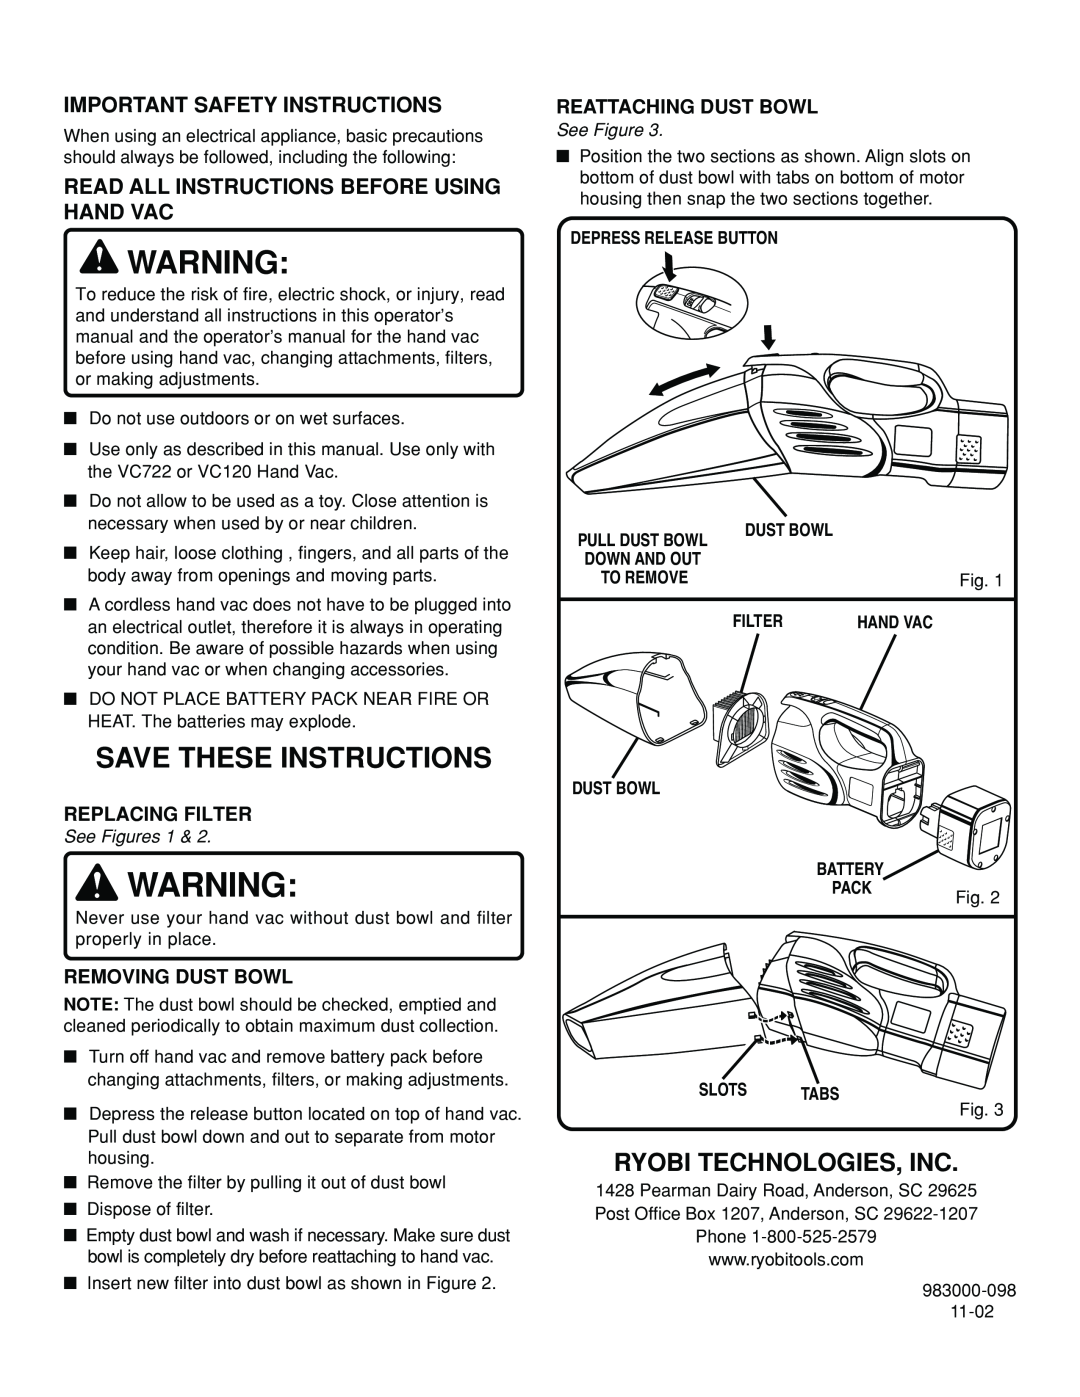 Ryobi VC722VC120 manual Ryobi Technologies, Inc, Important Safety Instructions, Read All Instructions Before Using Hand Vac 